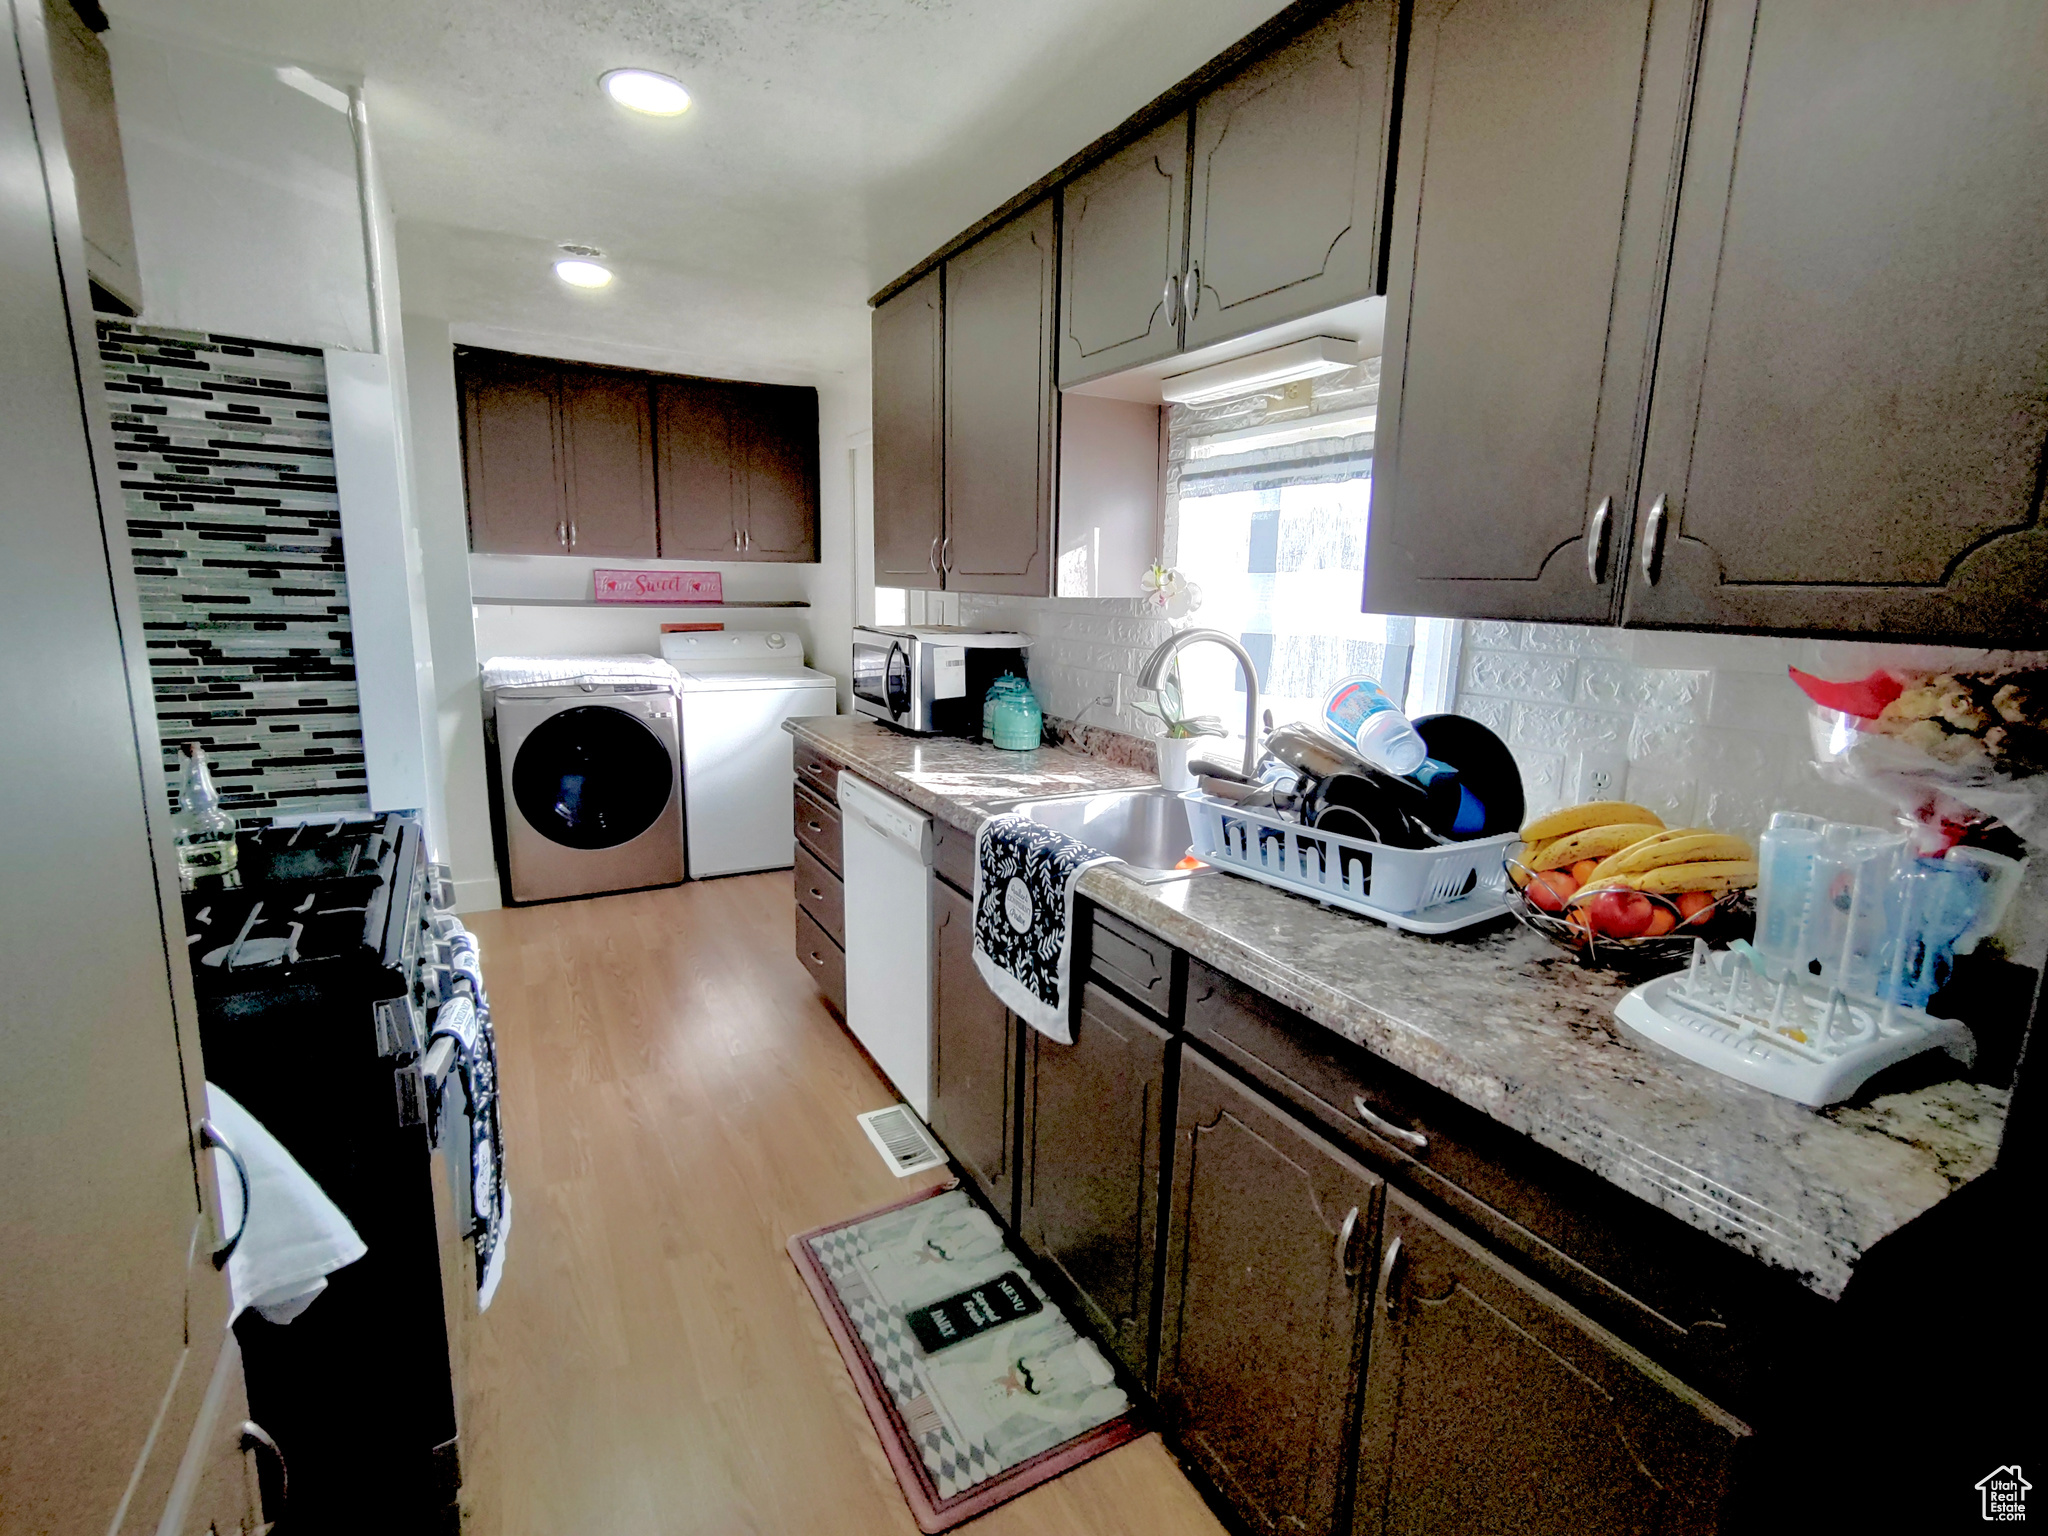 Kitchen with washing machine and clothes dryer, range, light hardwood / wood-style flooring, backsplash, and dark brown cabinets